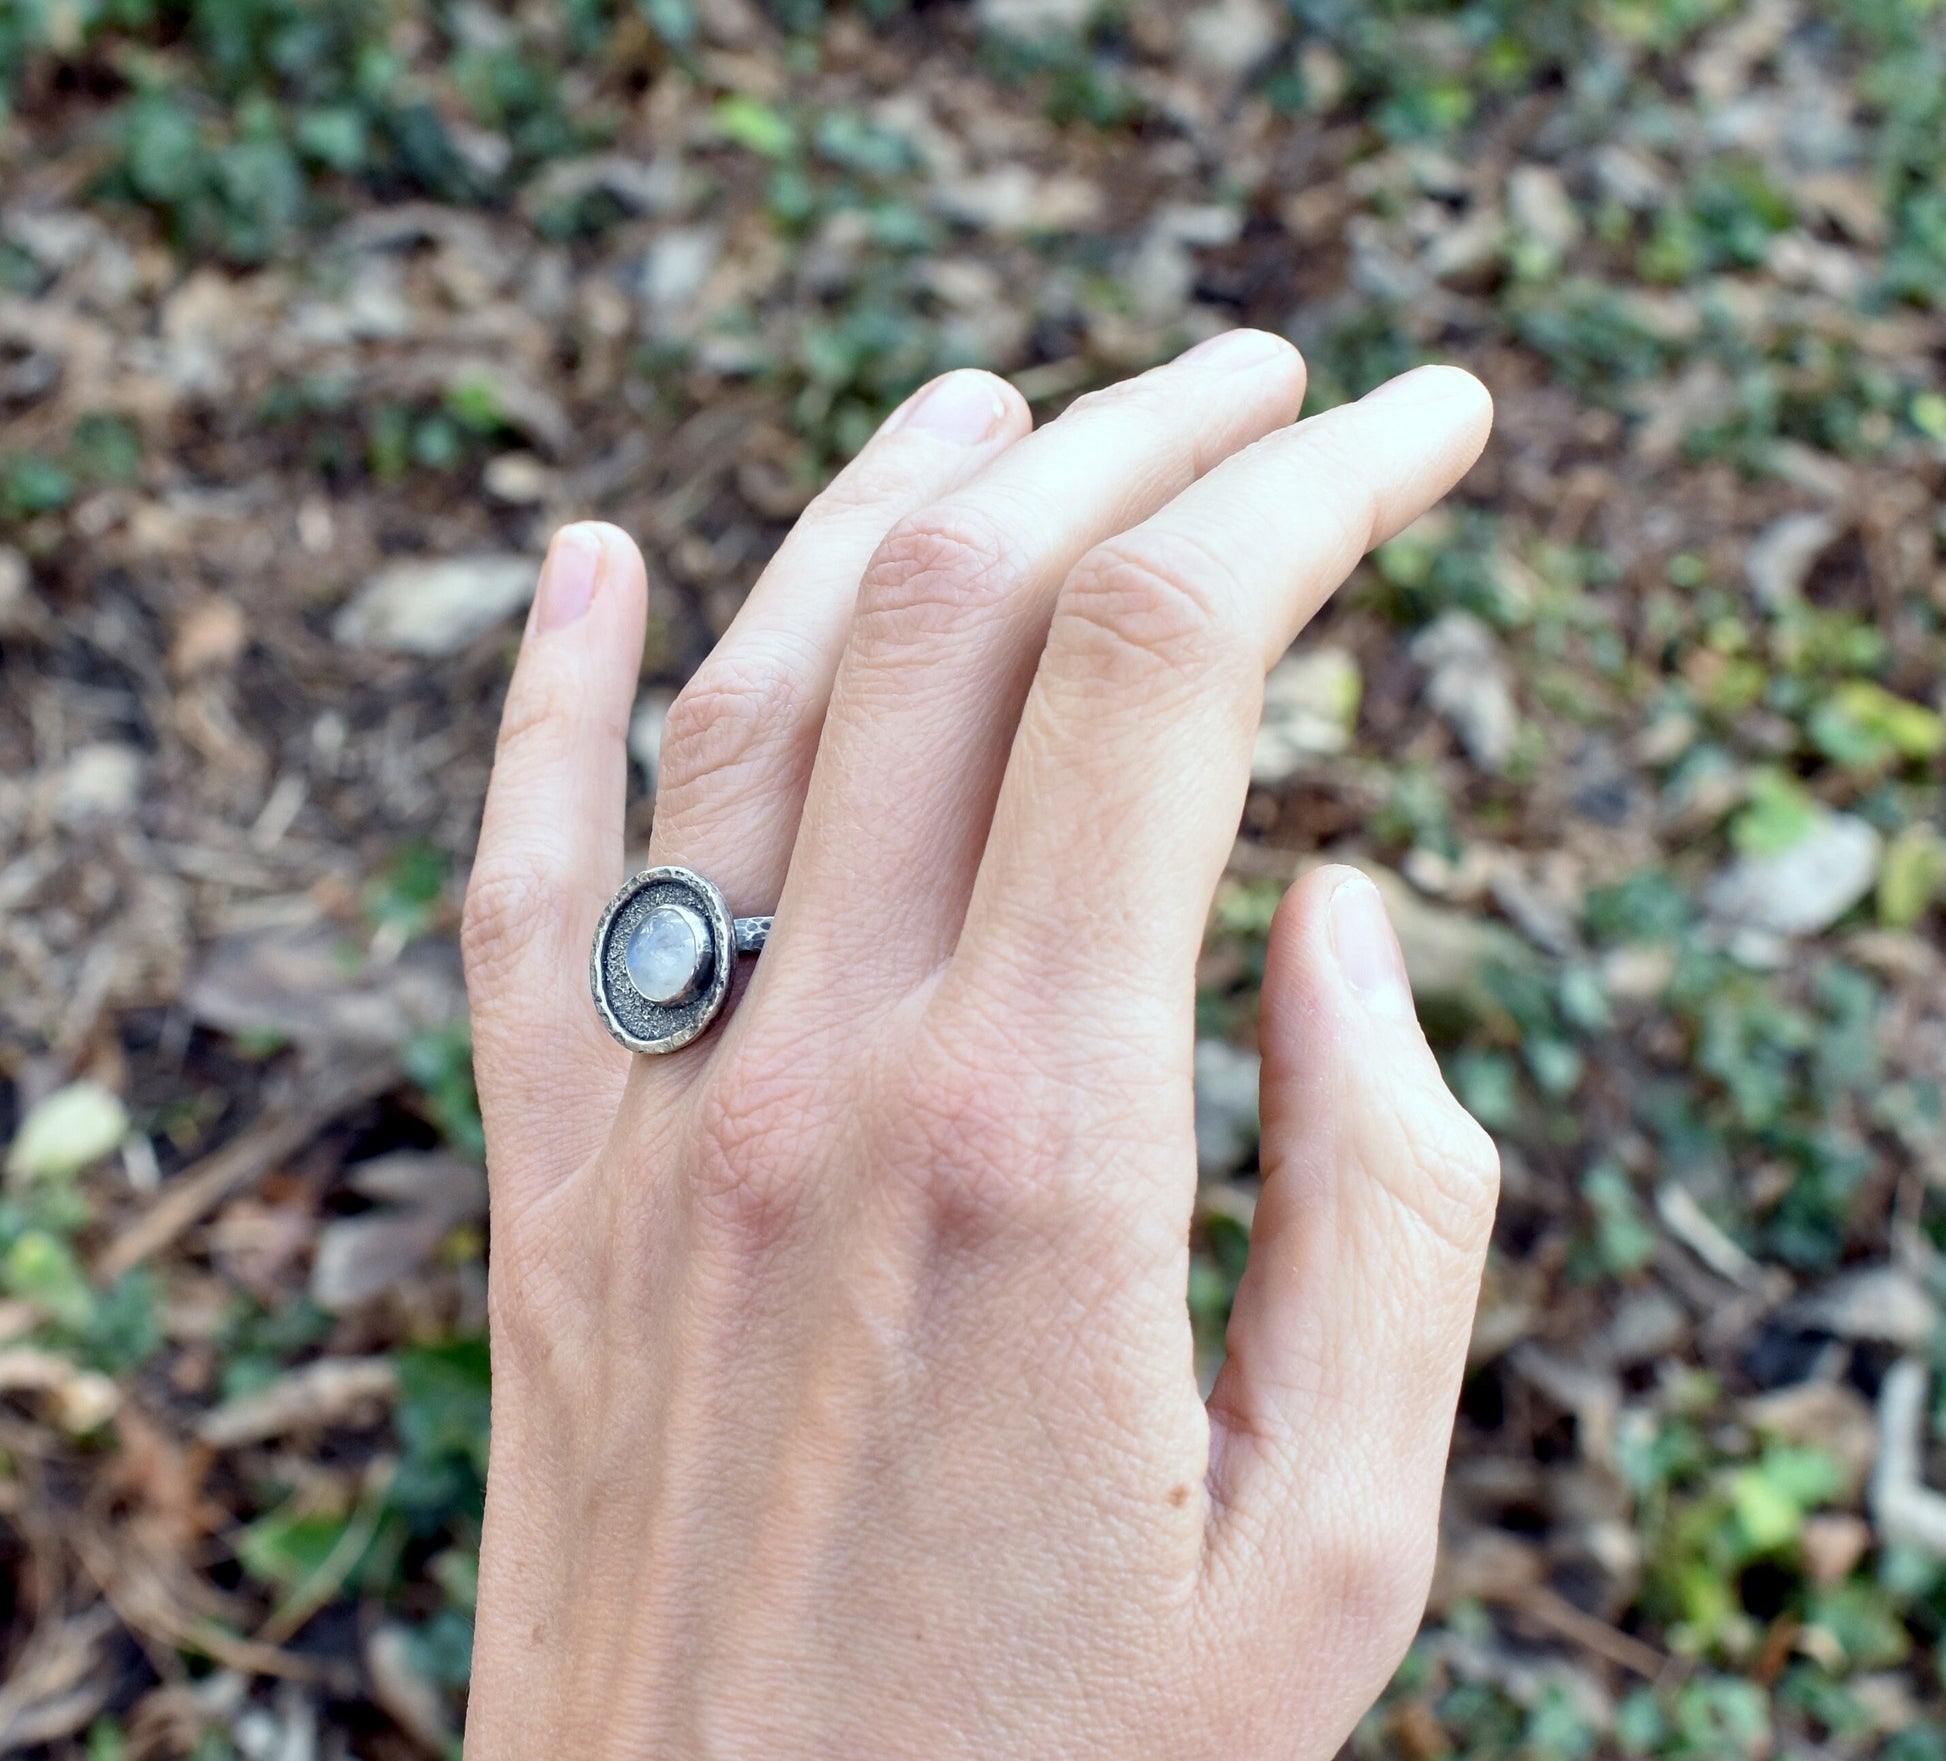 Rainbow Moonstone Ring Size 6, Organic Sterling Silver Jewelry Handmade, Unique Rustic Artisan Gemstone